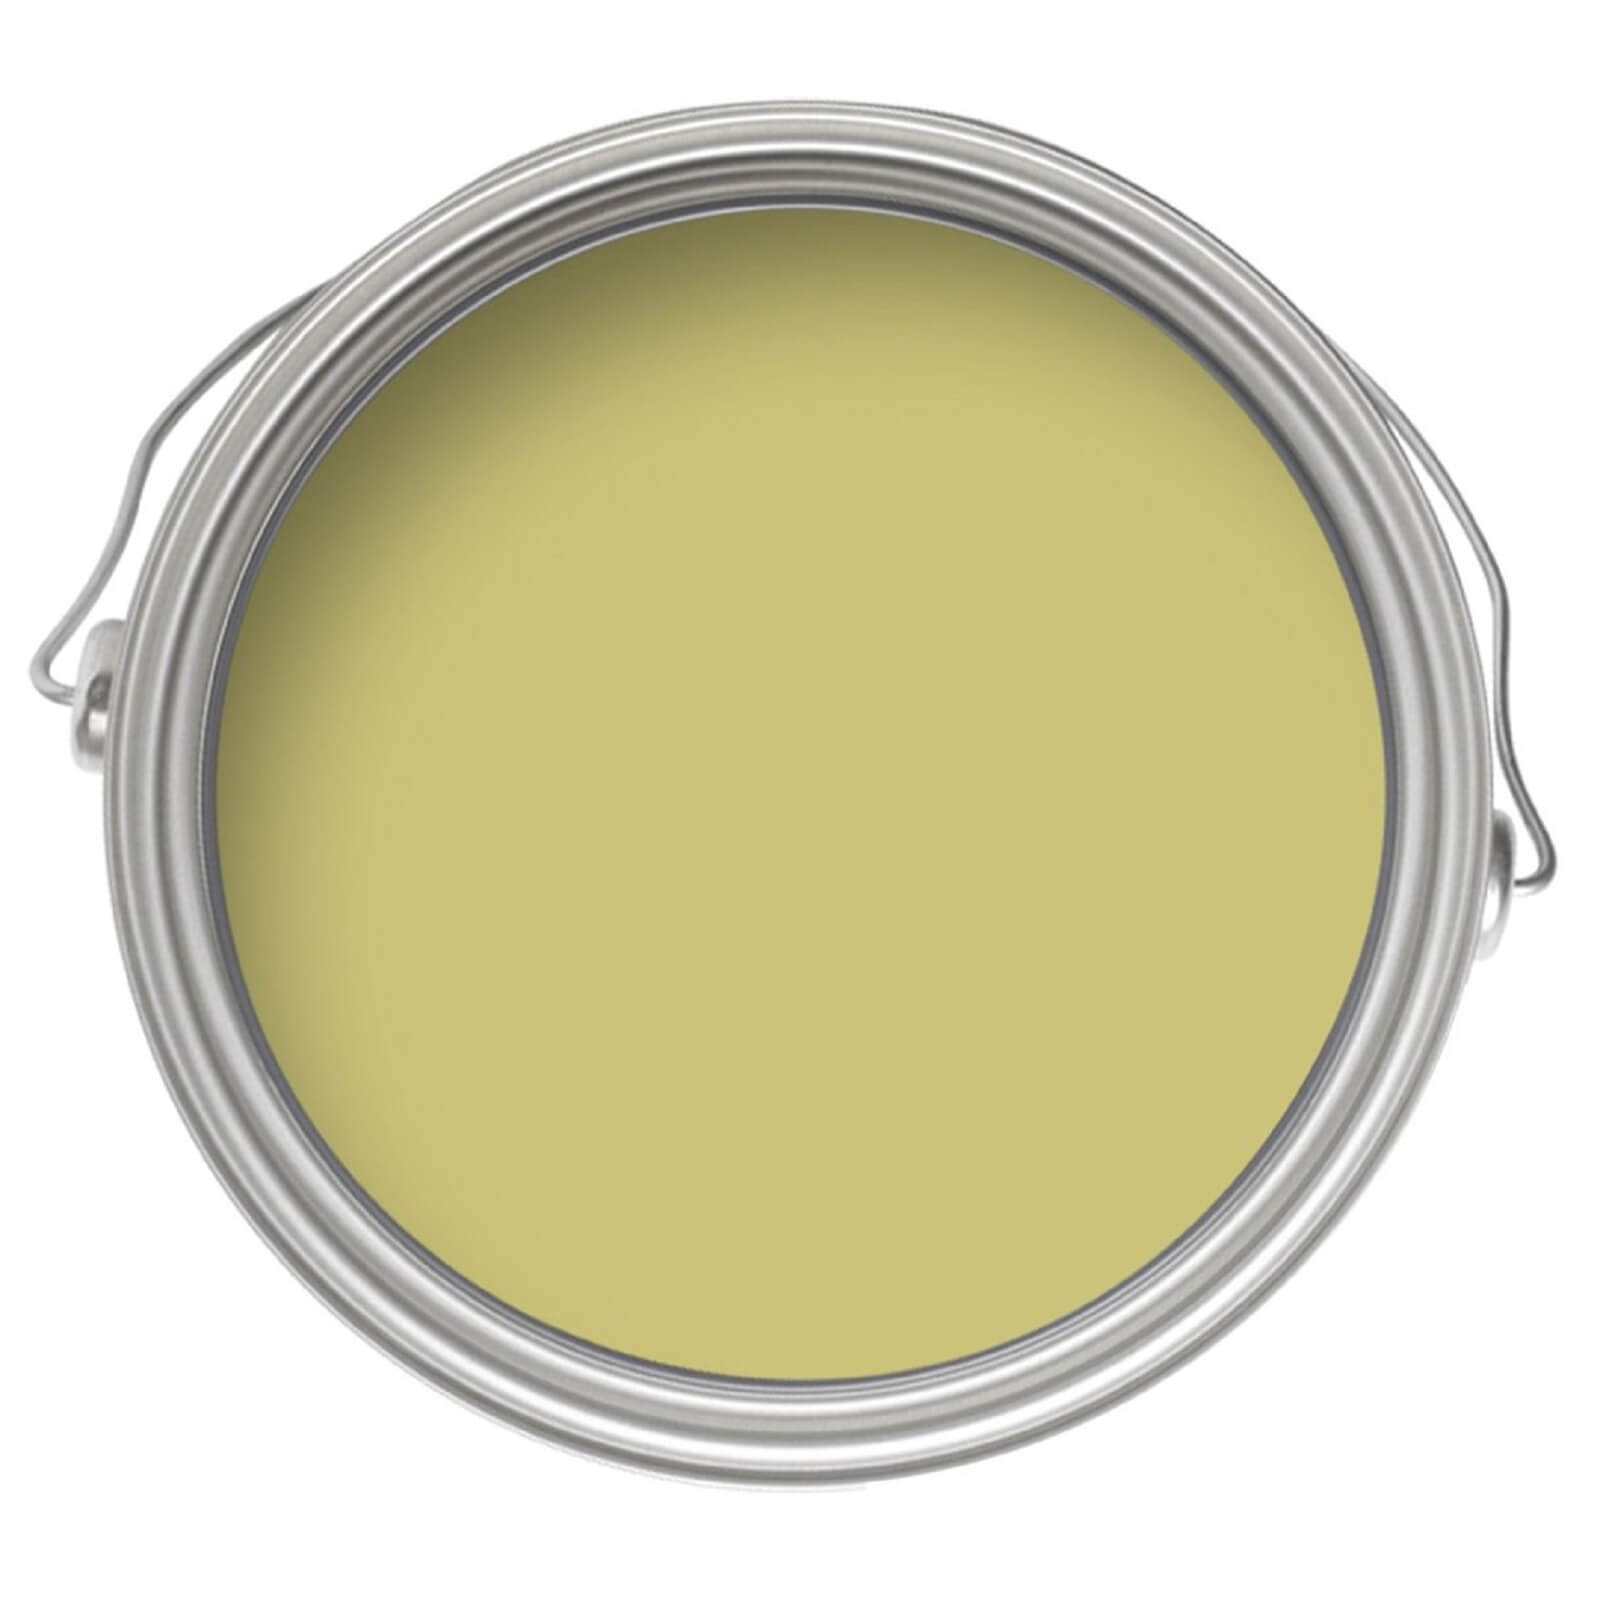 Crown Breatheasy Gentle Olive - Matt Standard Emulsion Paint - 2.5L